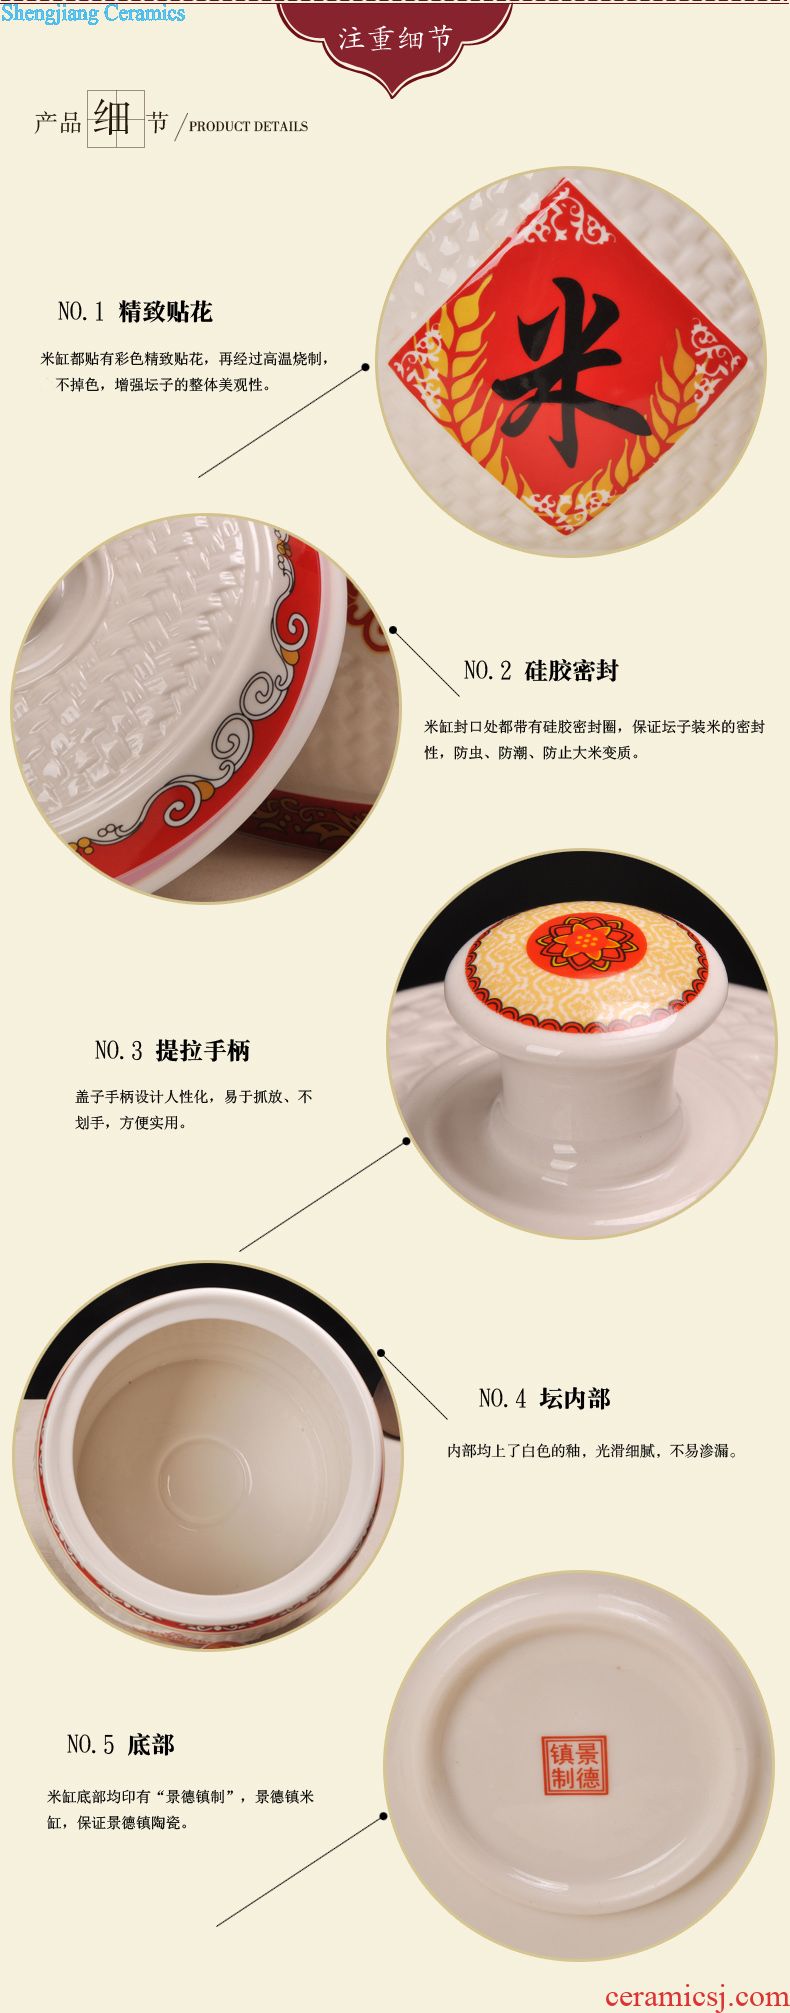 Jingdezhen ceramic barrel 20 jins hand-painted plum ricer box m tank storage tank tank cylinder insect-resistant moistureproof jar